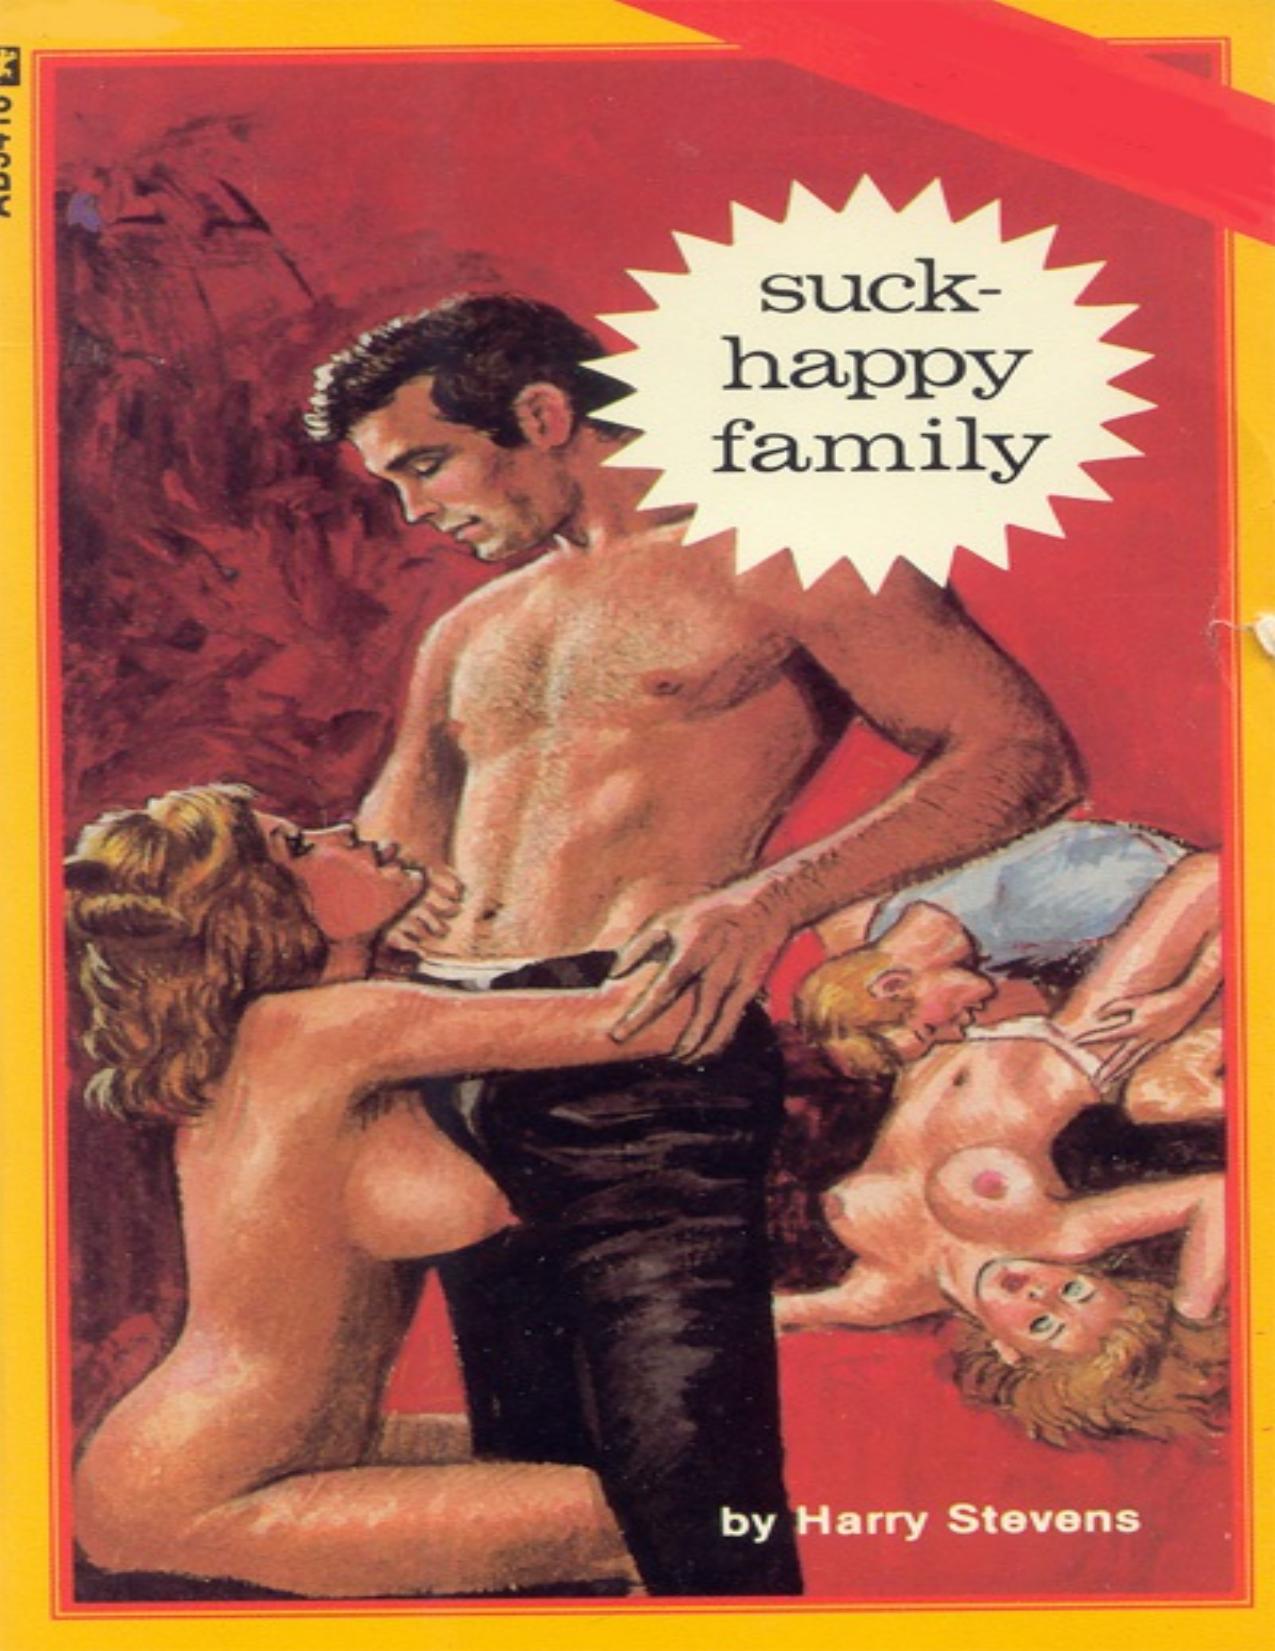 Suck-Happy Family by Harry Stevens